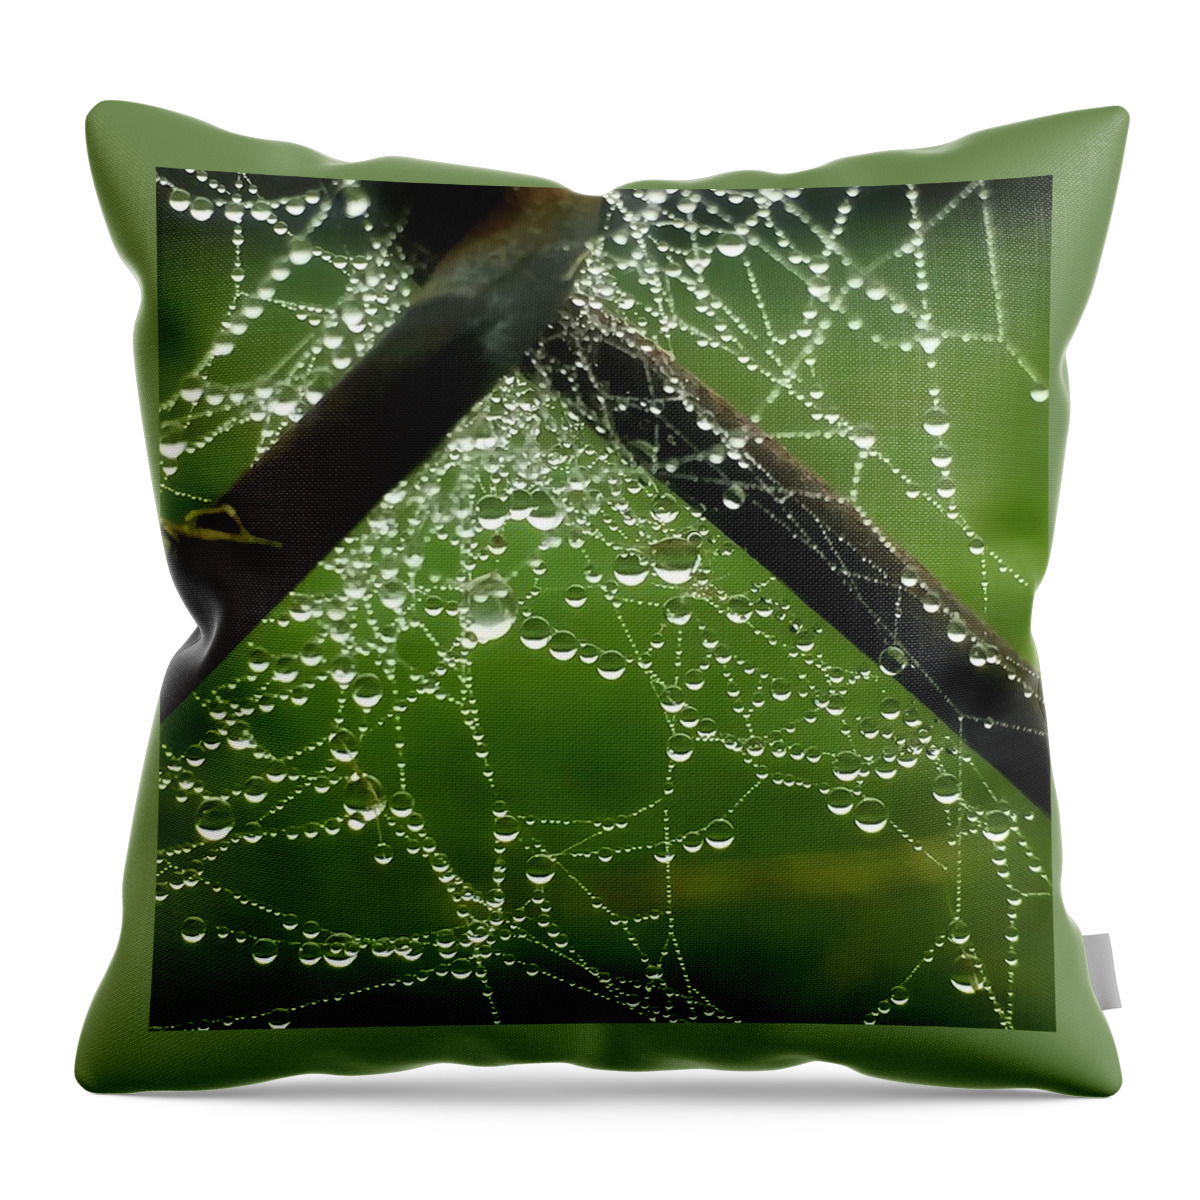 Web Throw Pillow featuring the photograph Lit Web by Terri Hart-Ellis